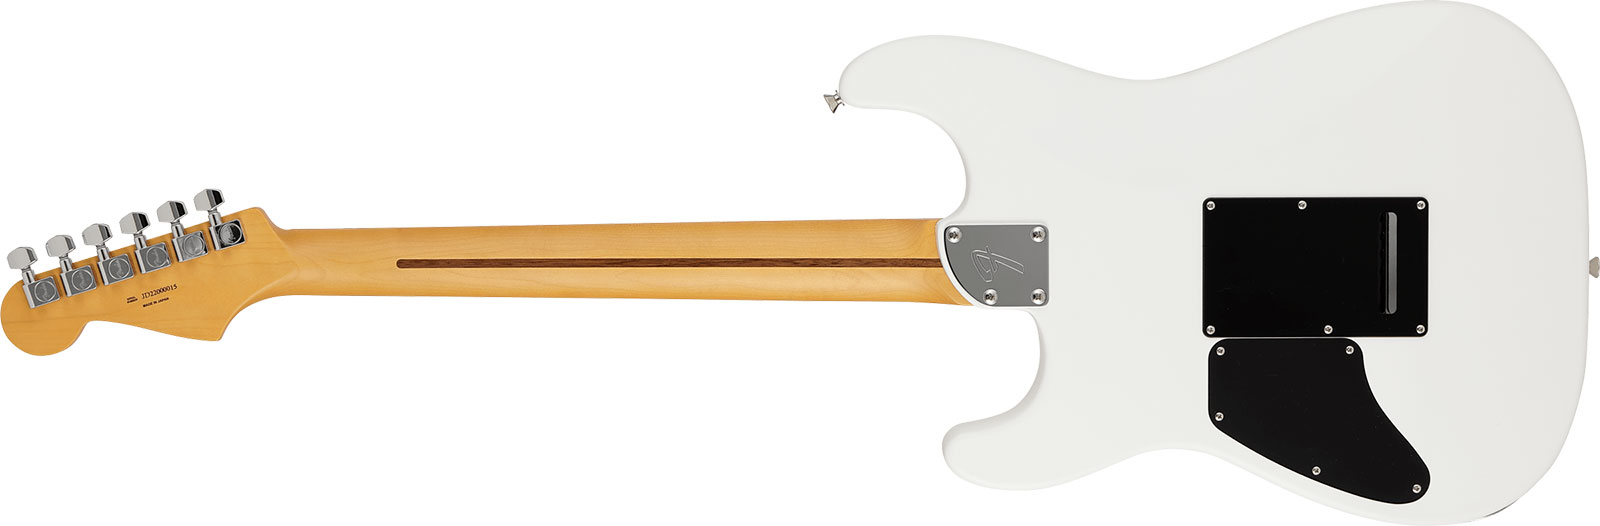 Fender Strat Elemental Mij Jap 2h Trem Rw - Nimbus White - E-Gitarre in Str-Form - Variation 1